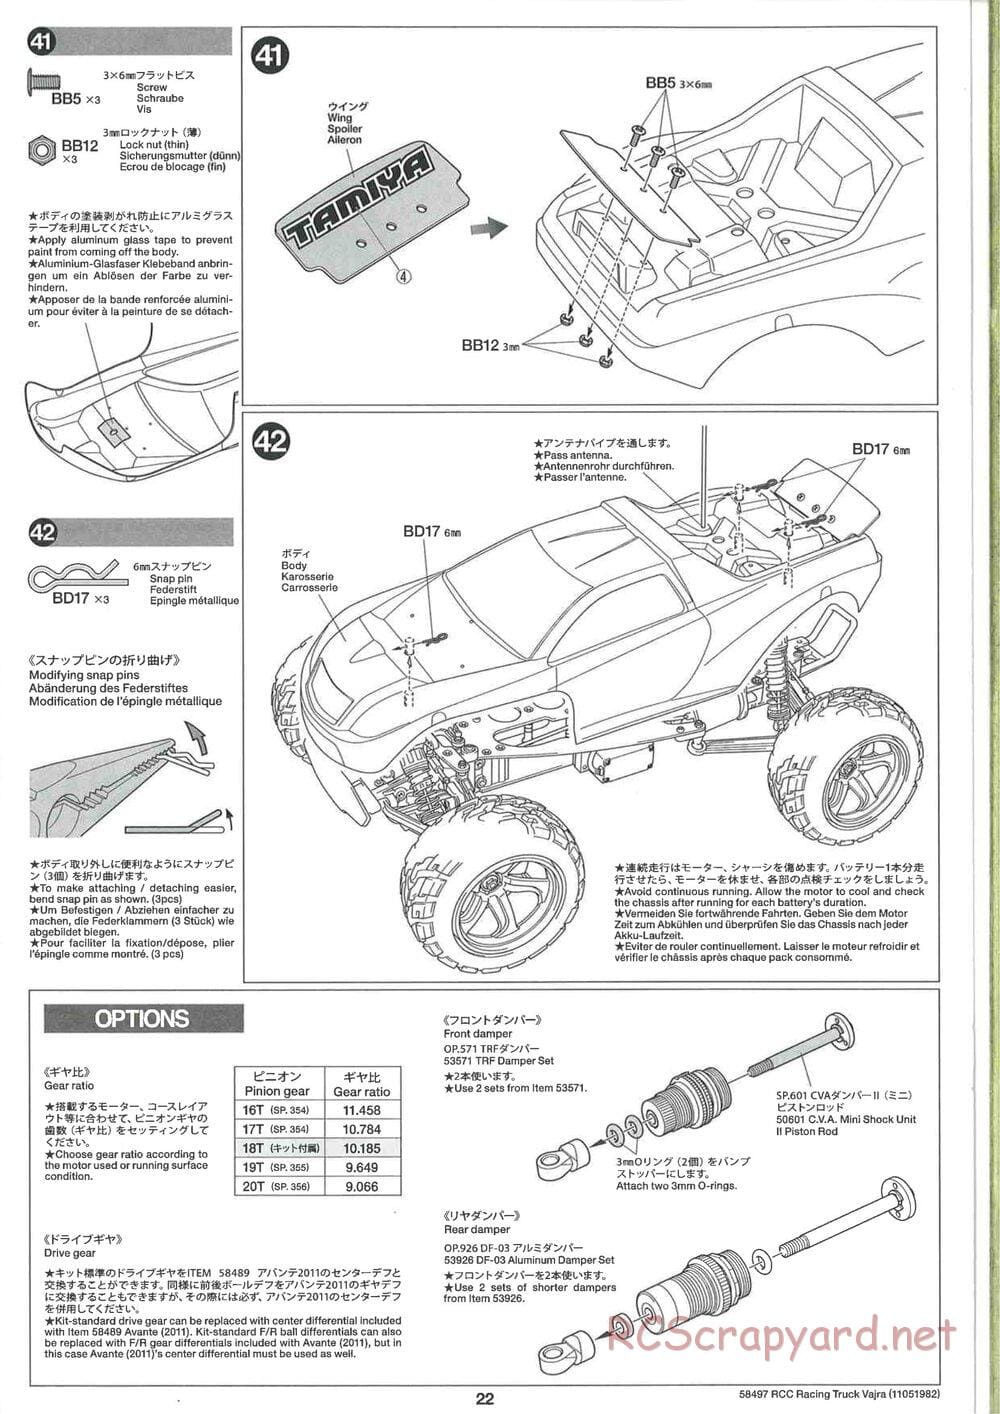 Tamiya - Vajra - AV Chassis - Manual - Page 22